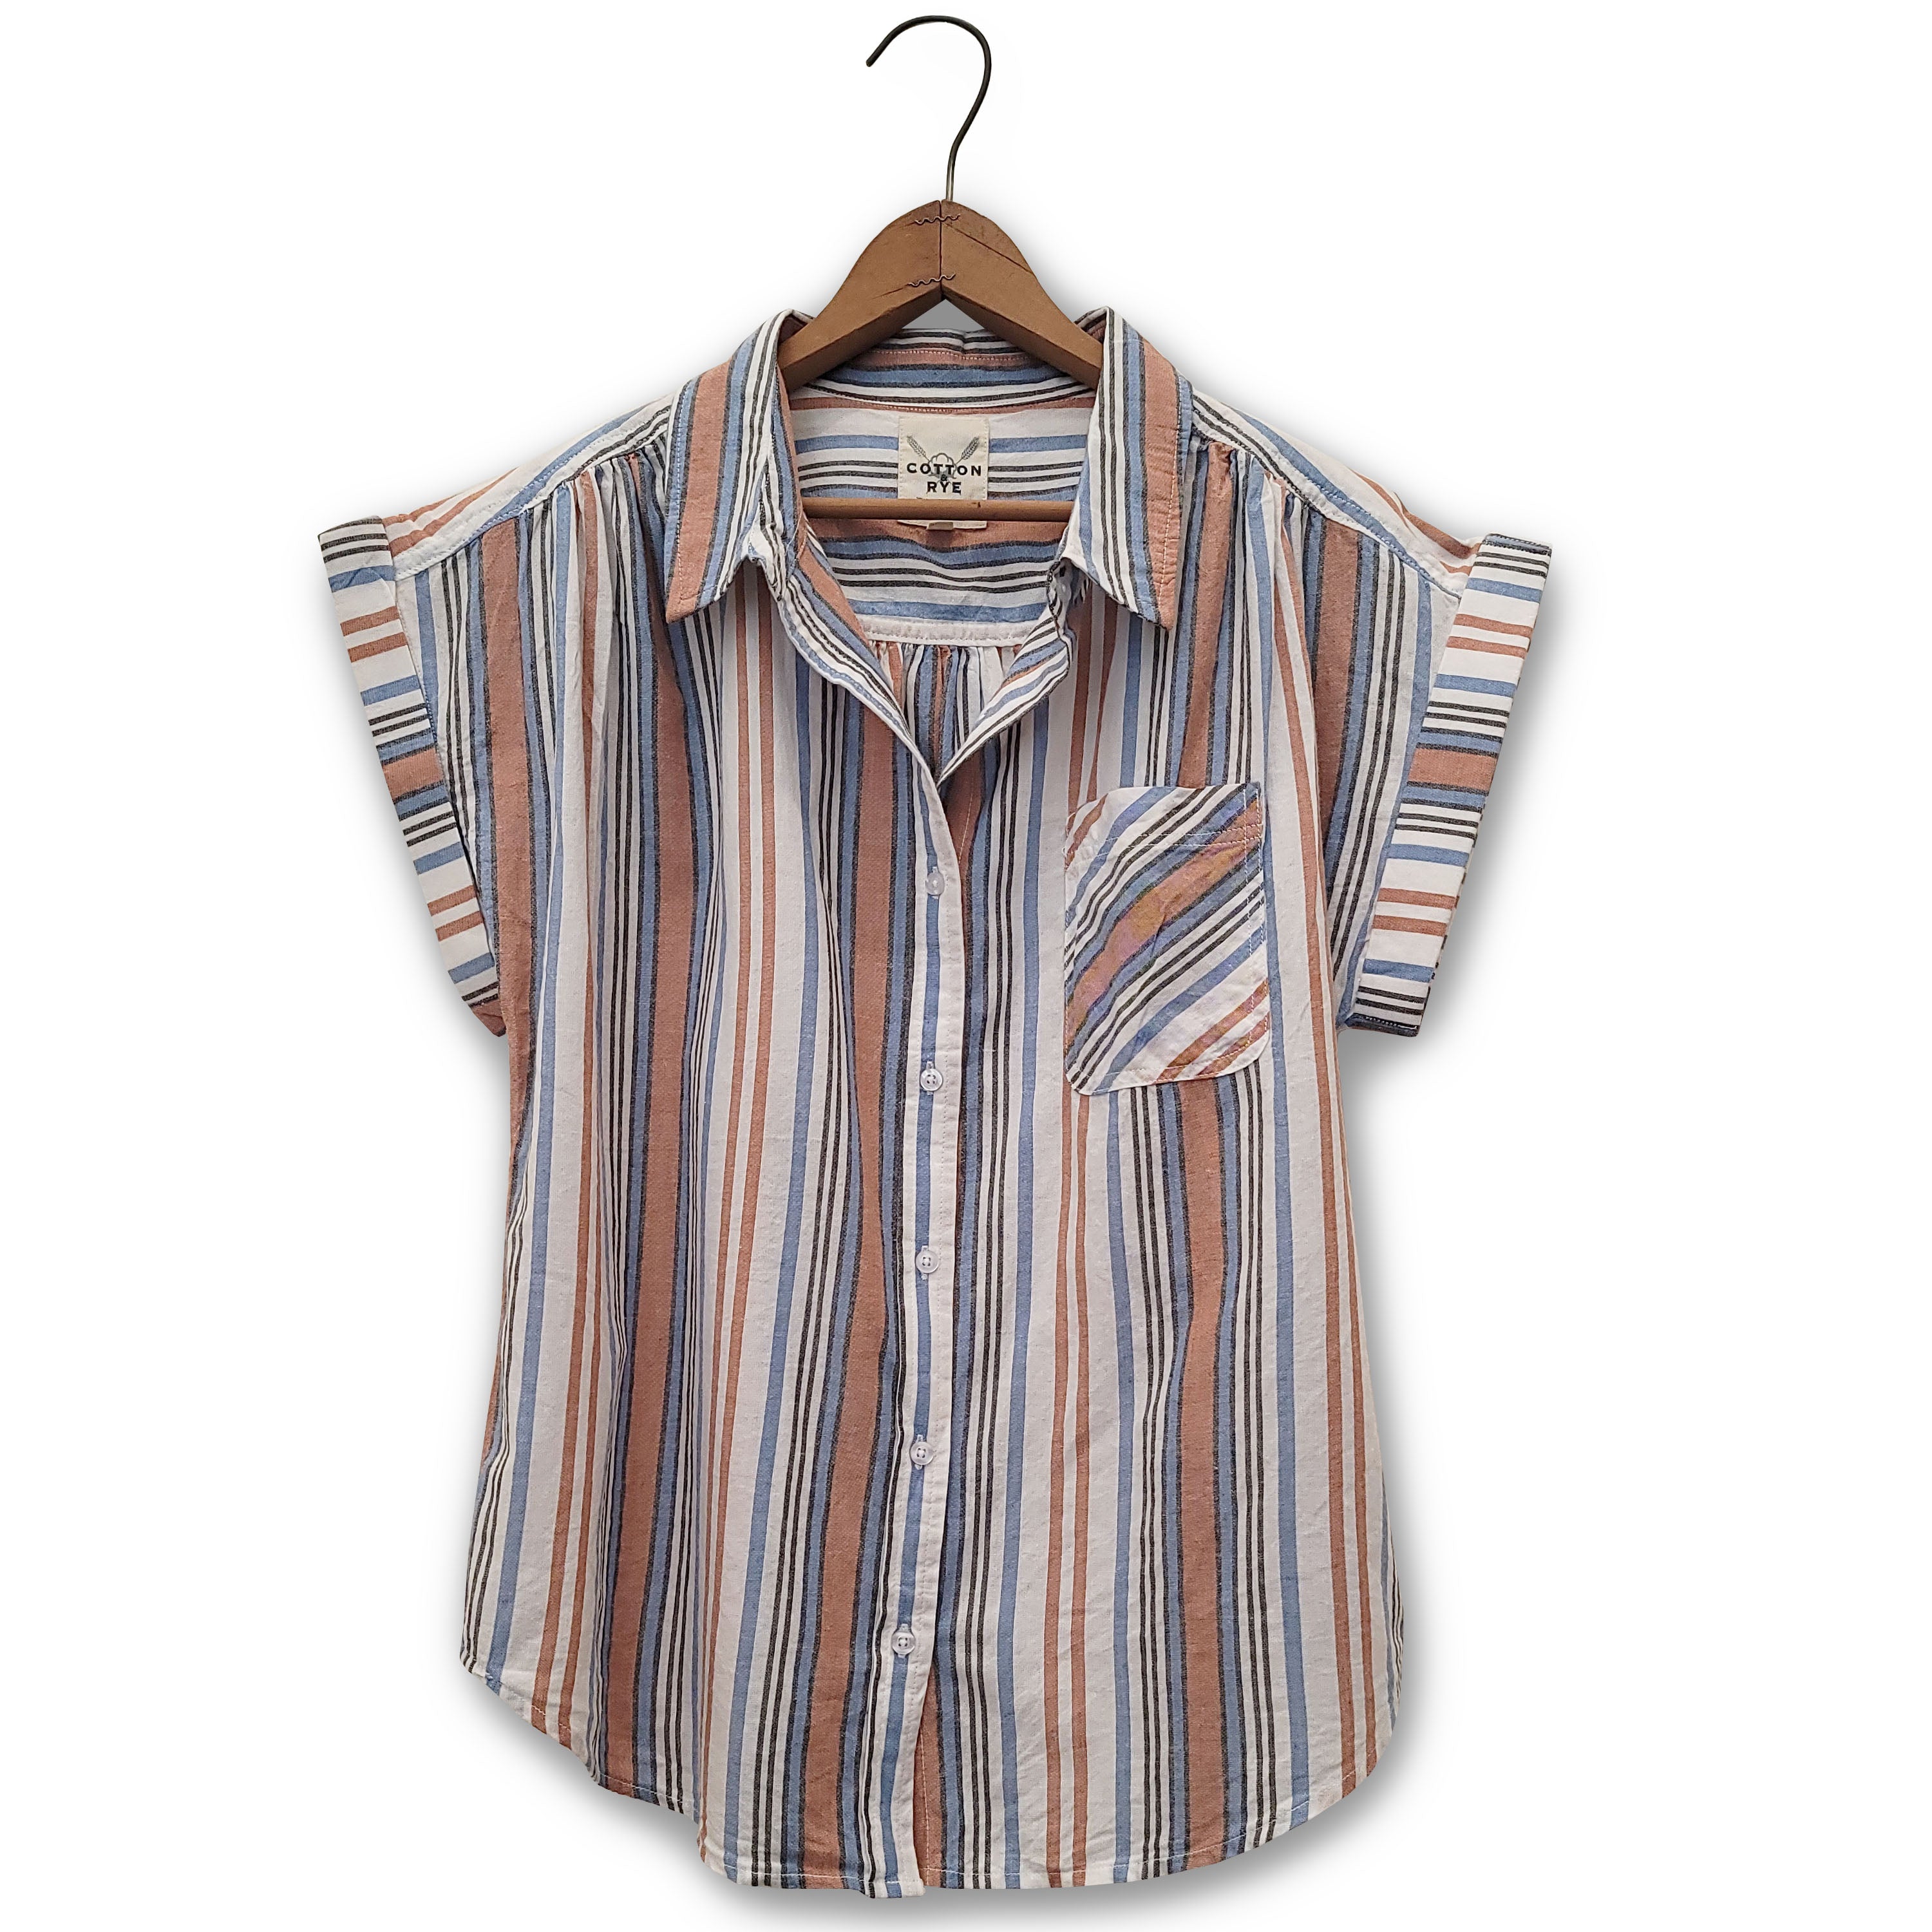 Stripe Shirt by Cotton & Rye #CRW932M Multi